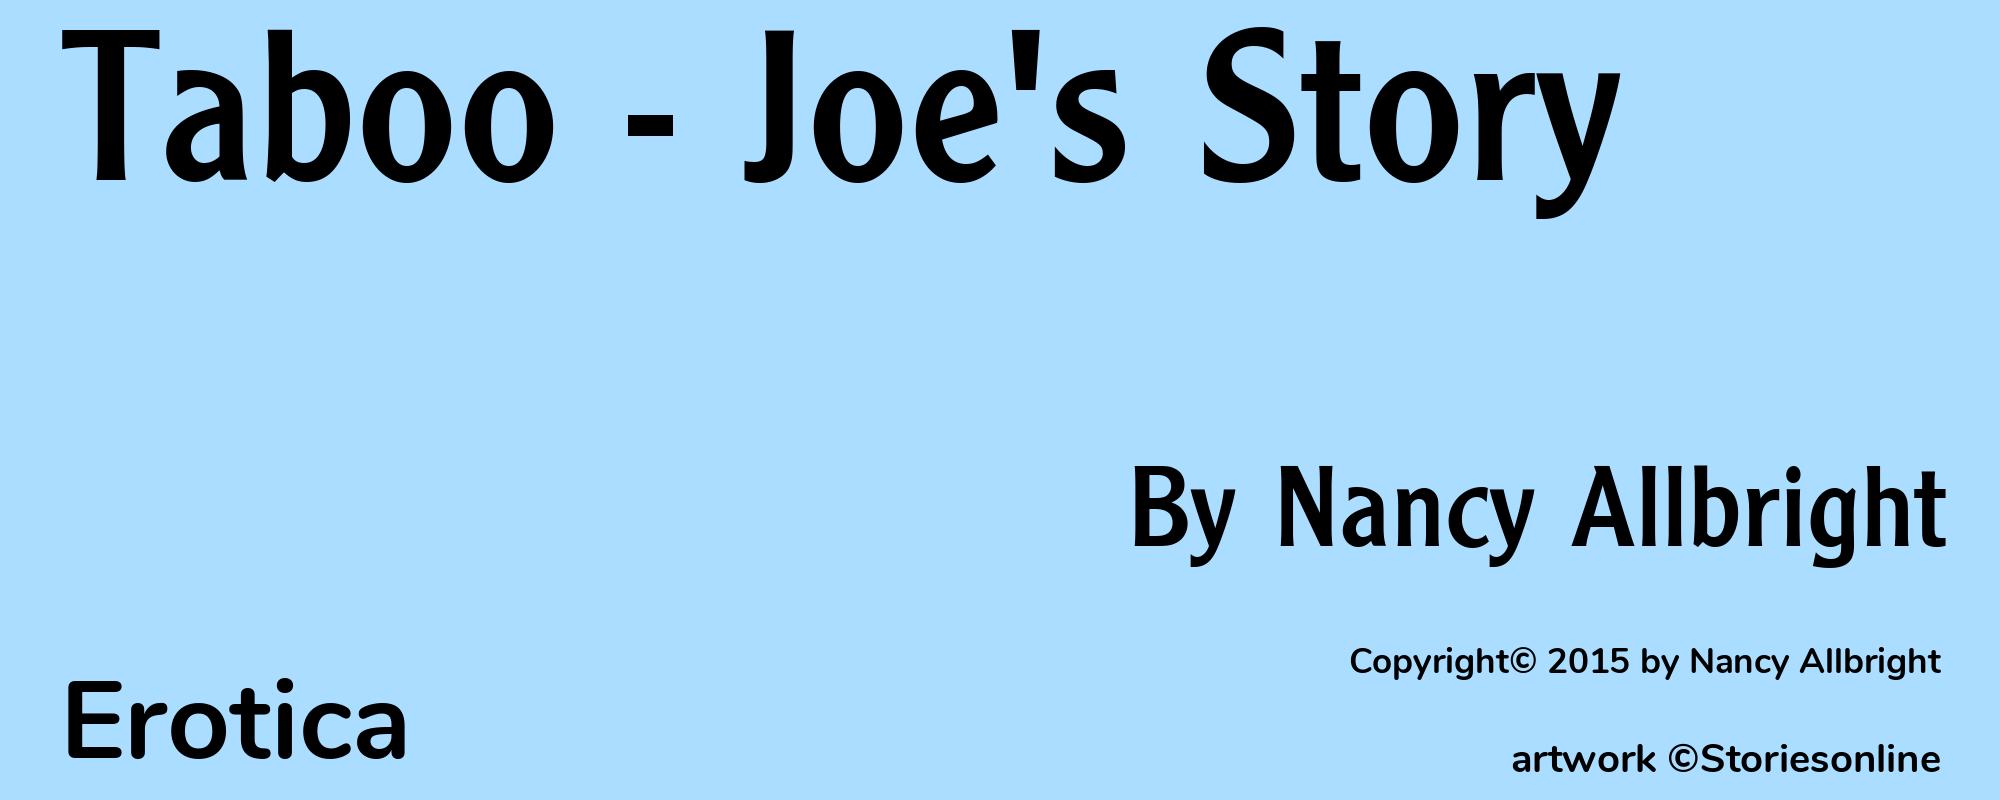 Taboo - Joe's Story - Cover